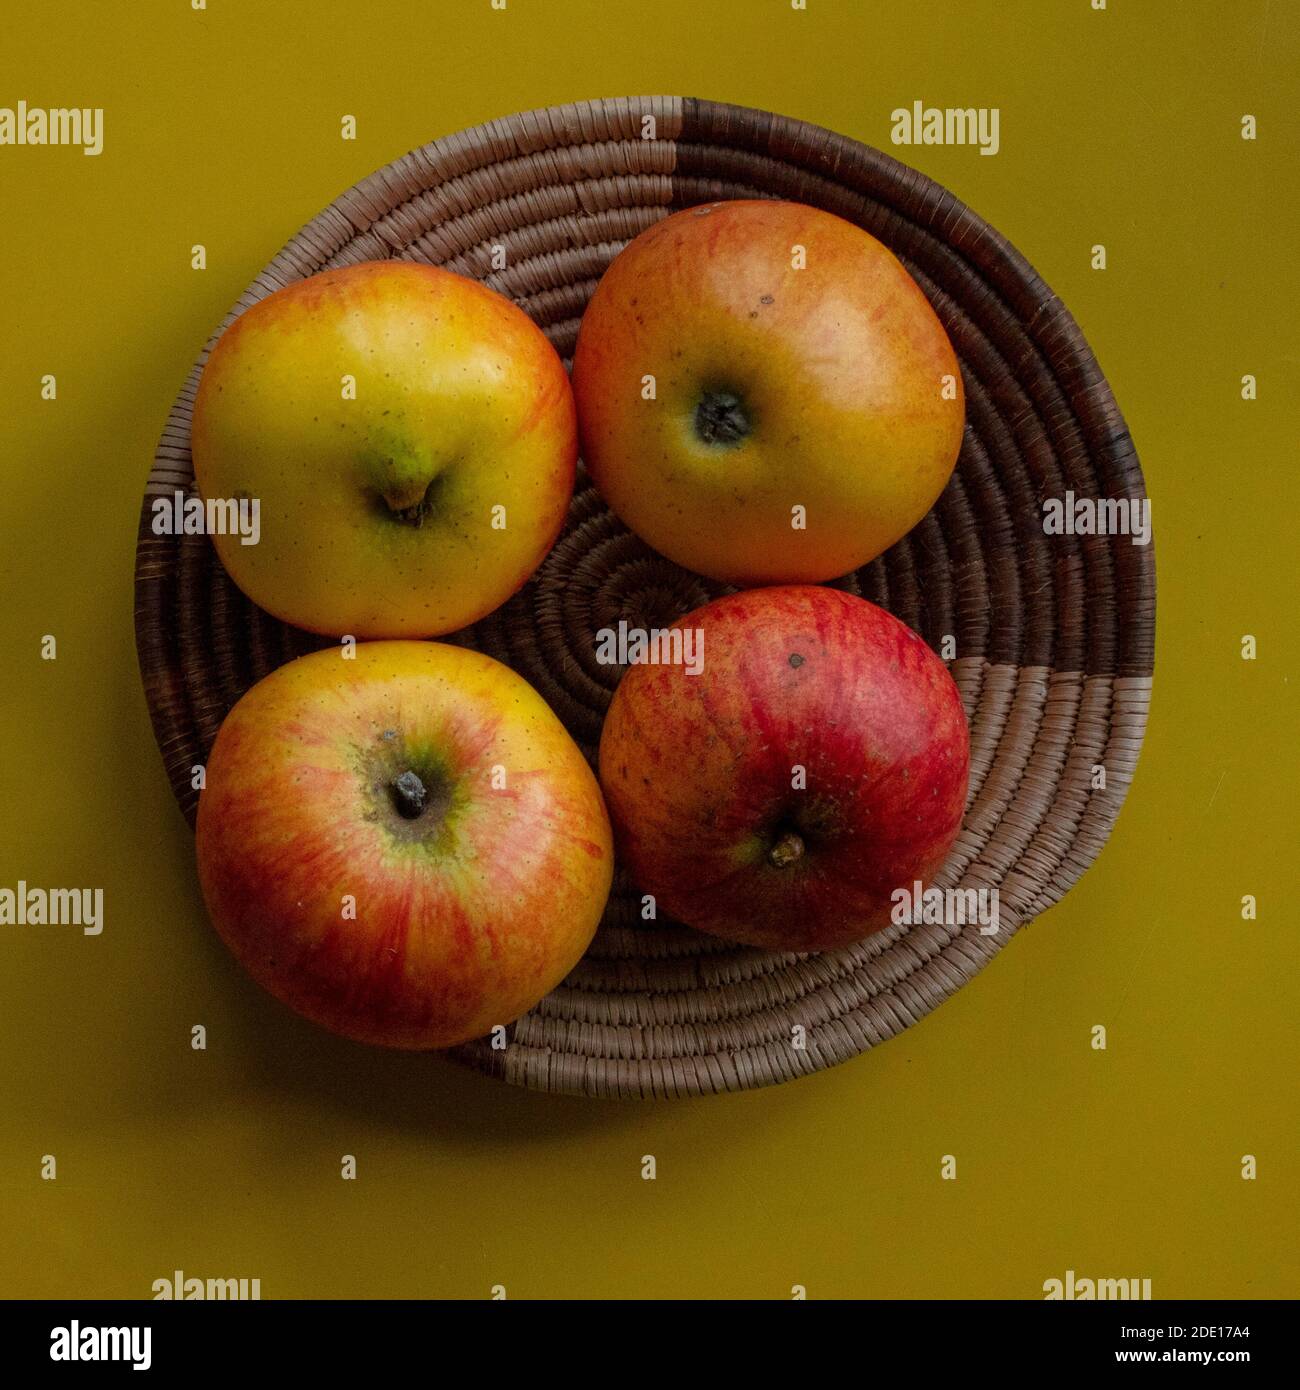 Newton Wonder apples in wicker basket Stock Photo